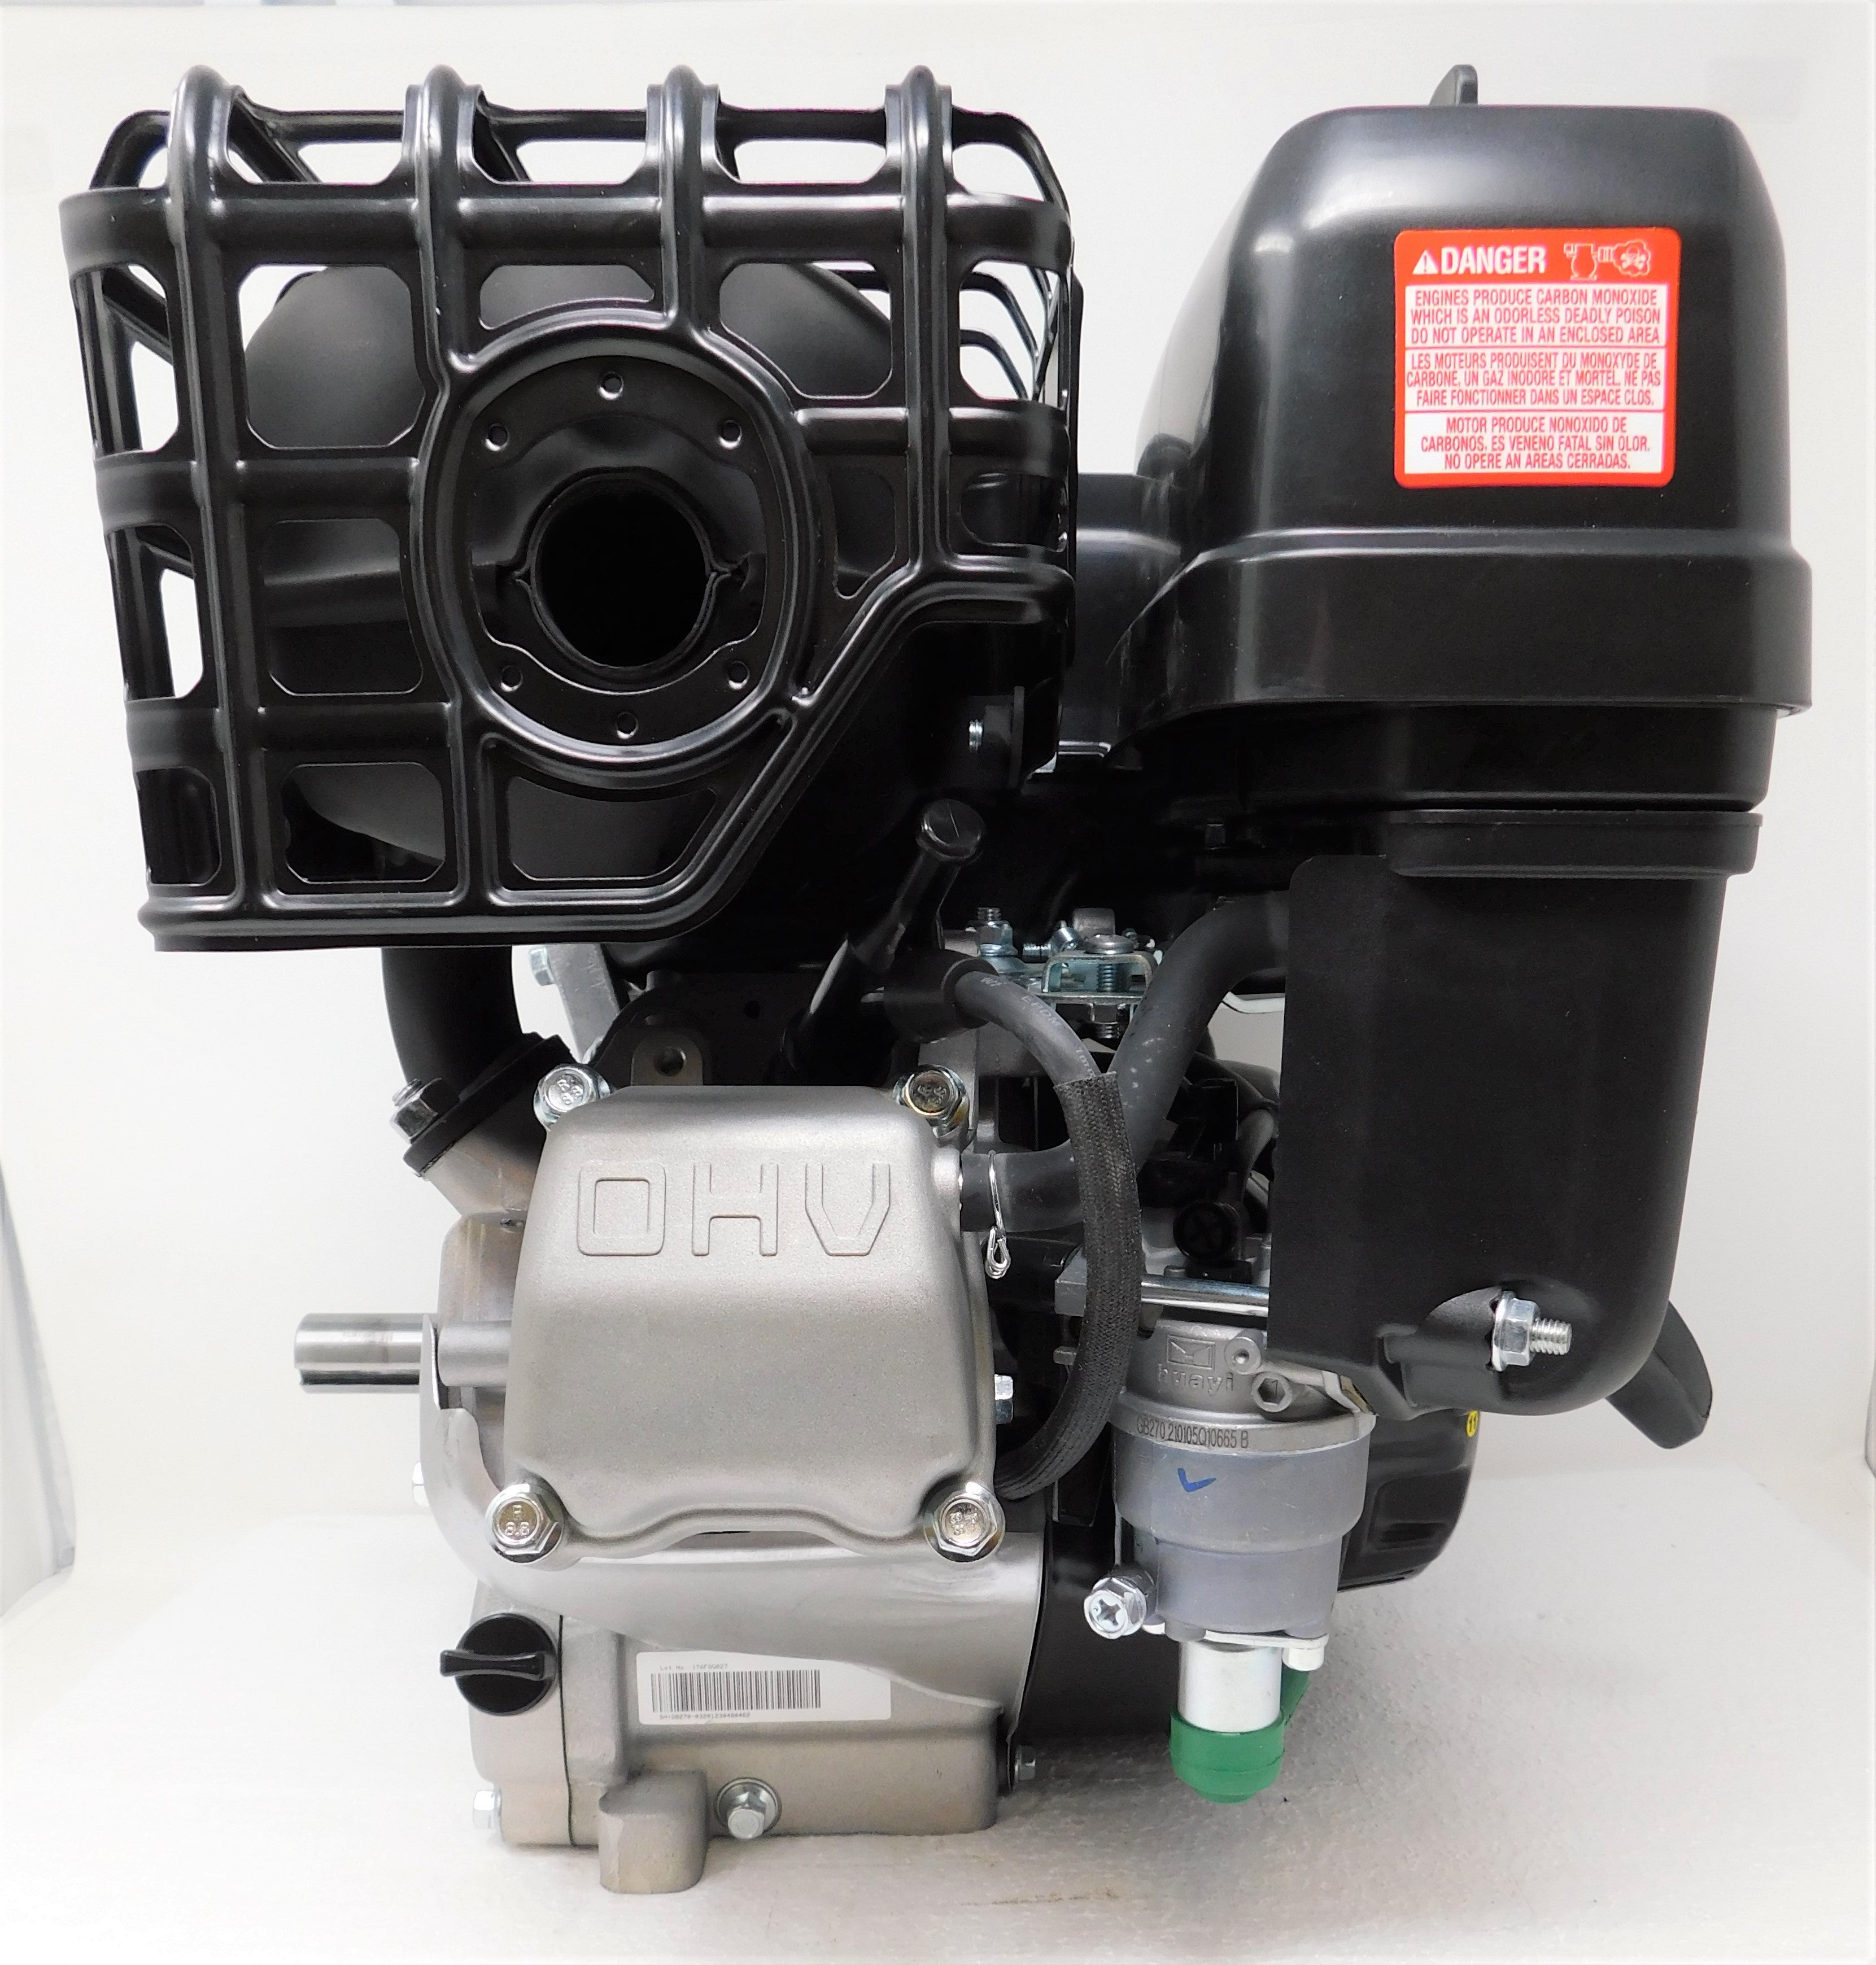 Simpson CRX270 272cc Horizontal Shaft Engine 1" x 2-7/8" #100845